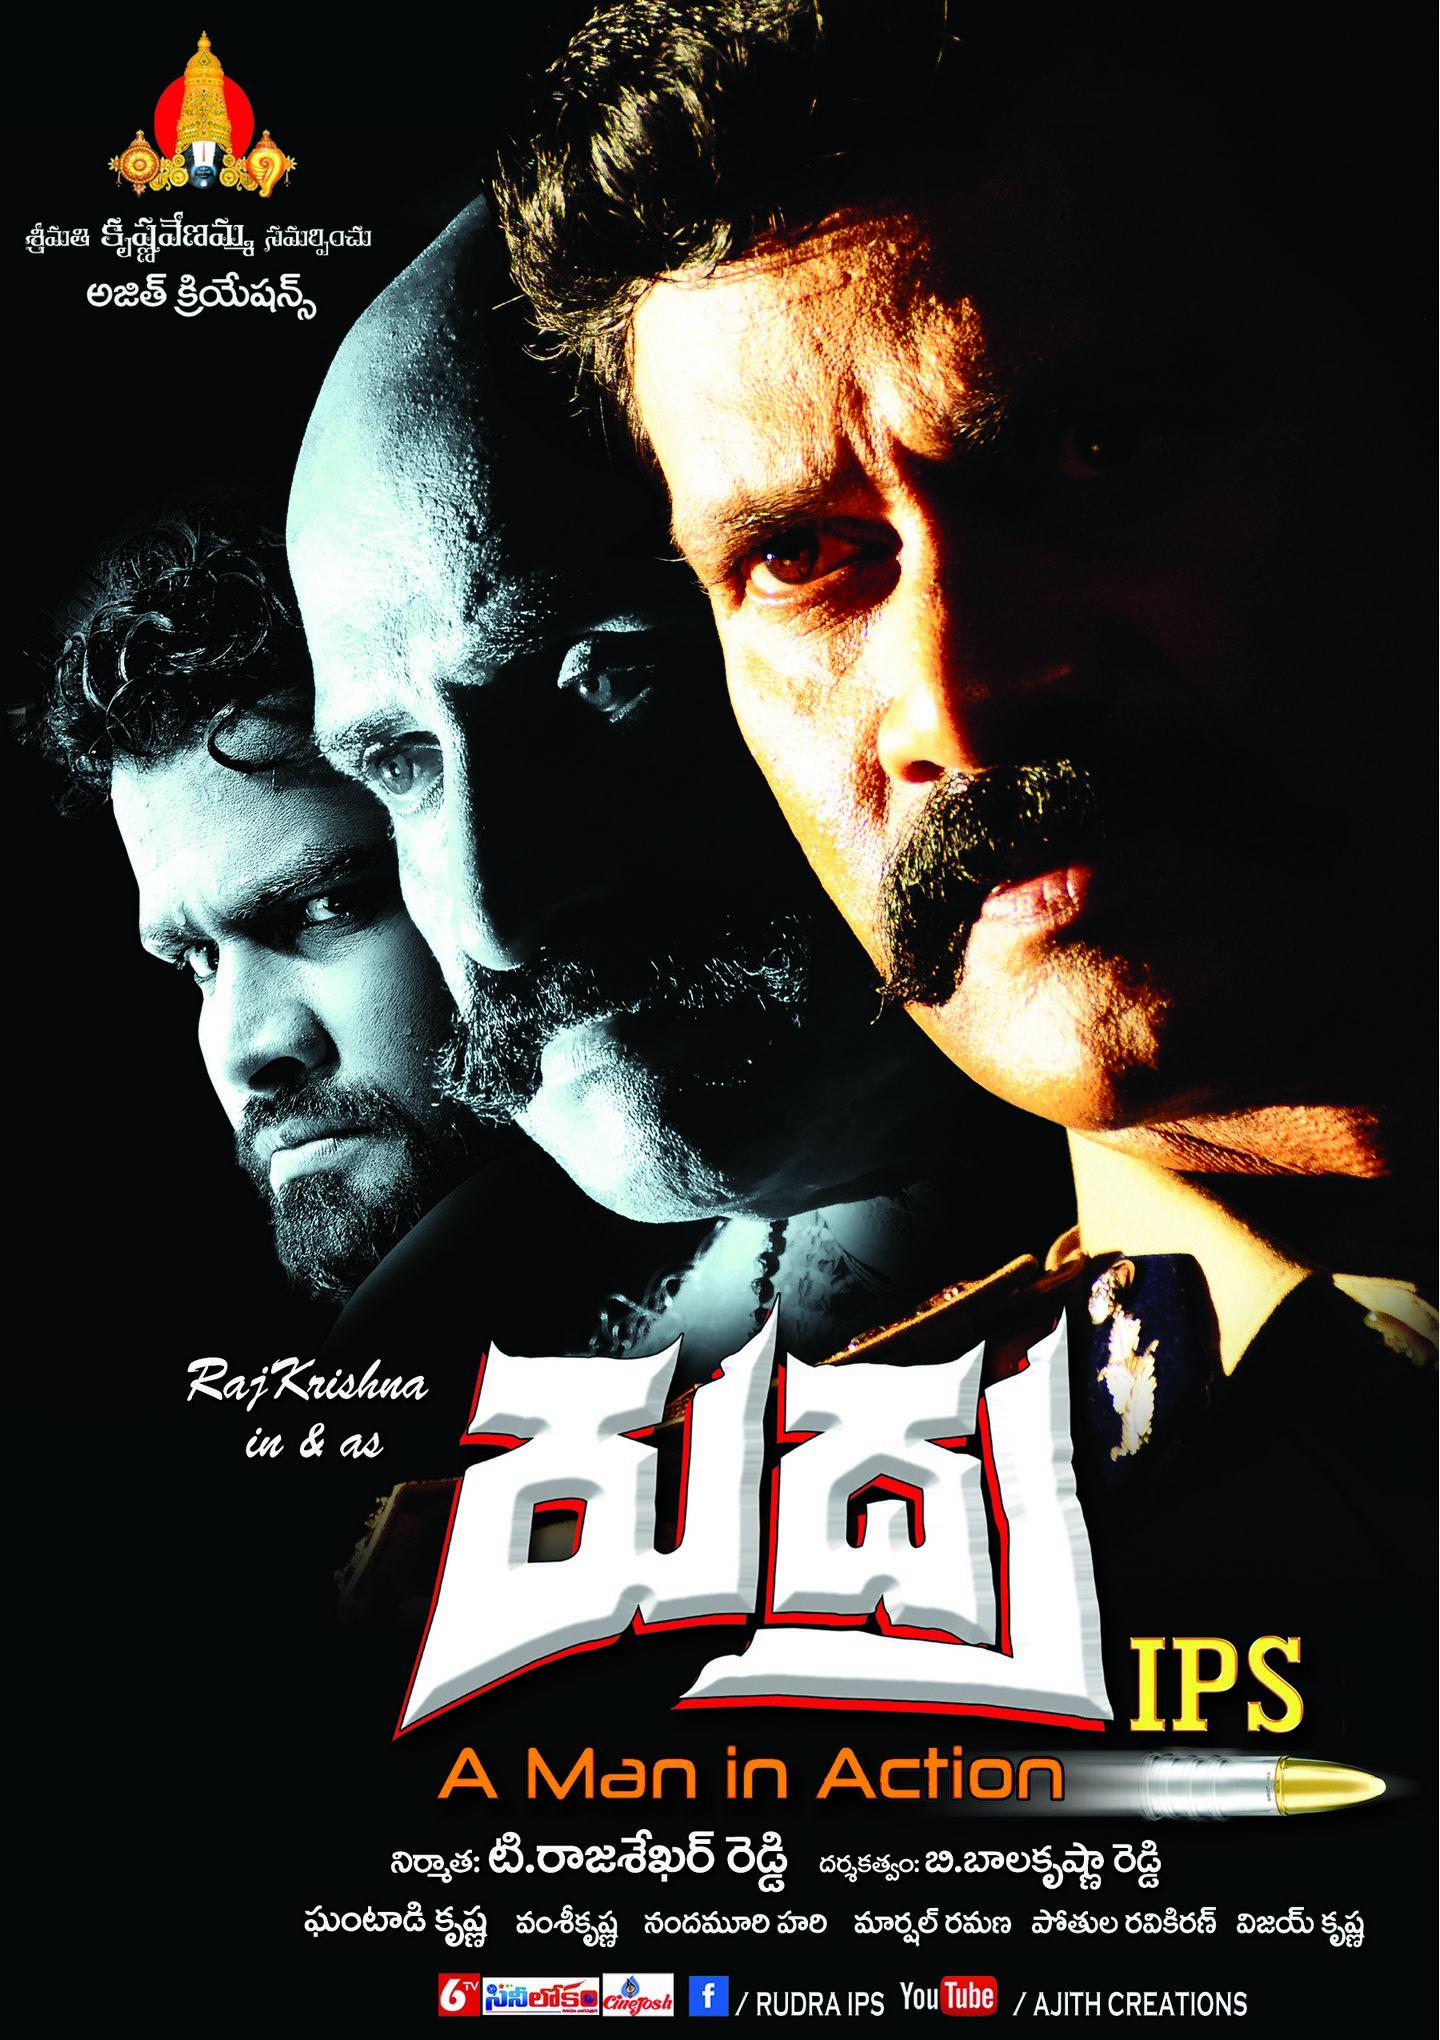 Rudra IPS Movie Posters